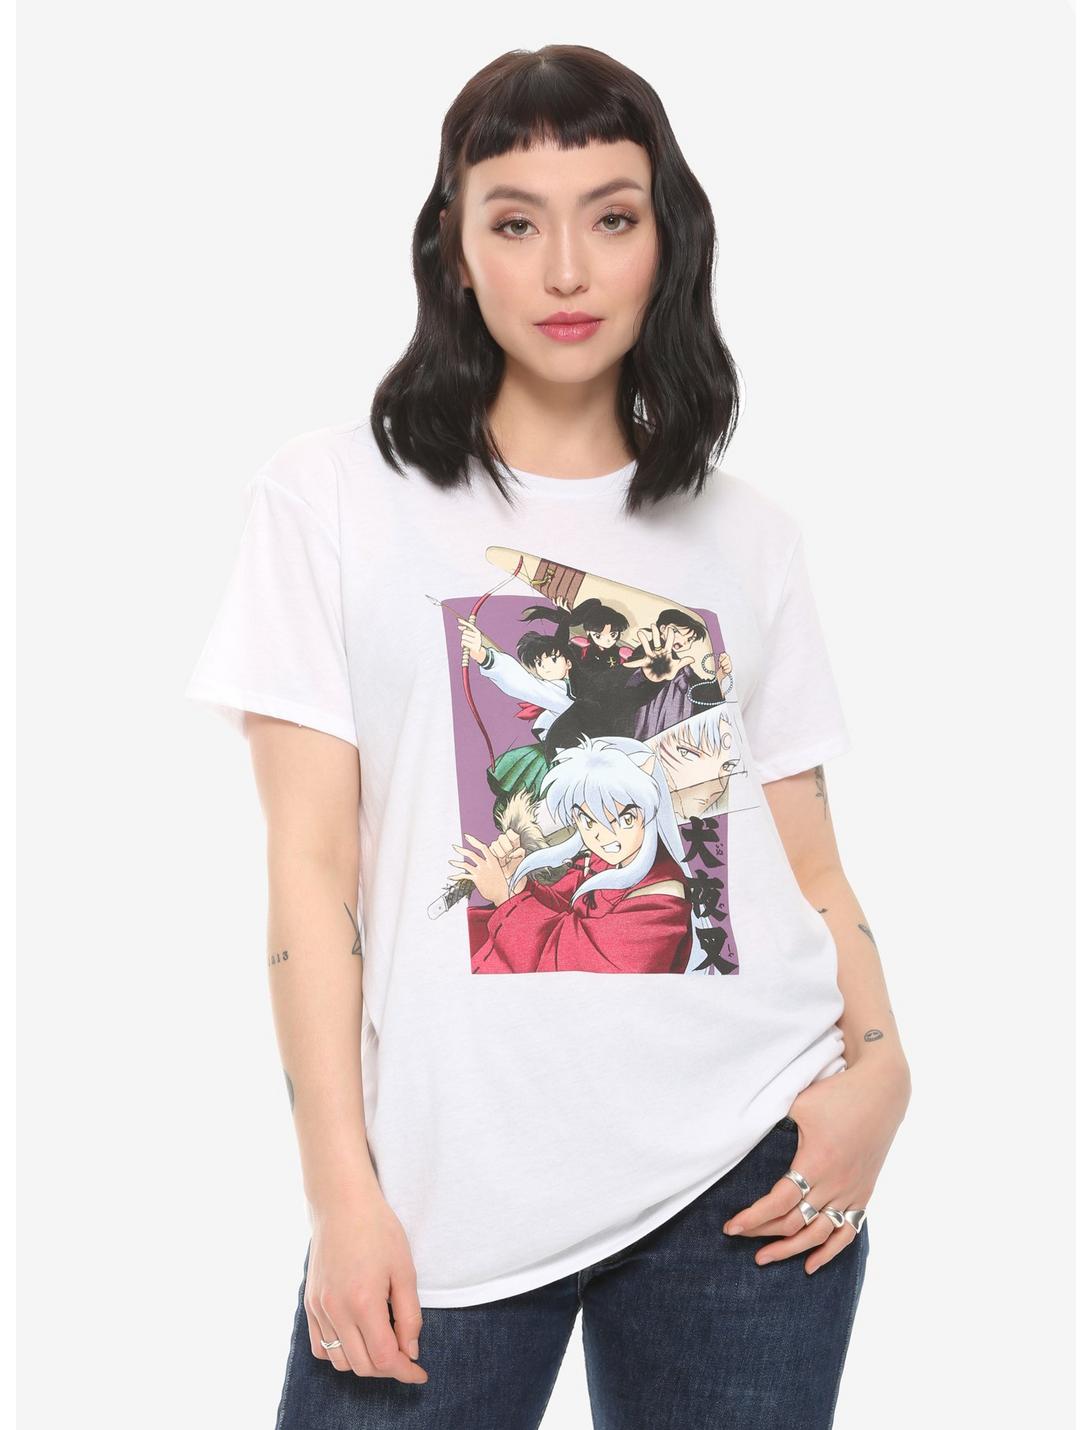 Inuyasha Group Girls T-Shirt, MULTI, hi-res